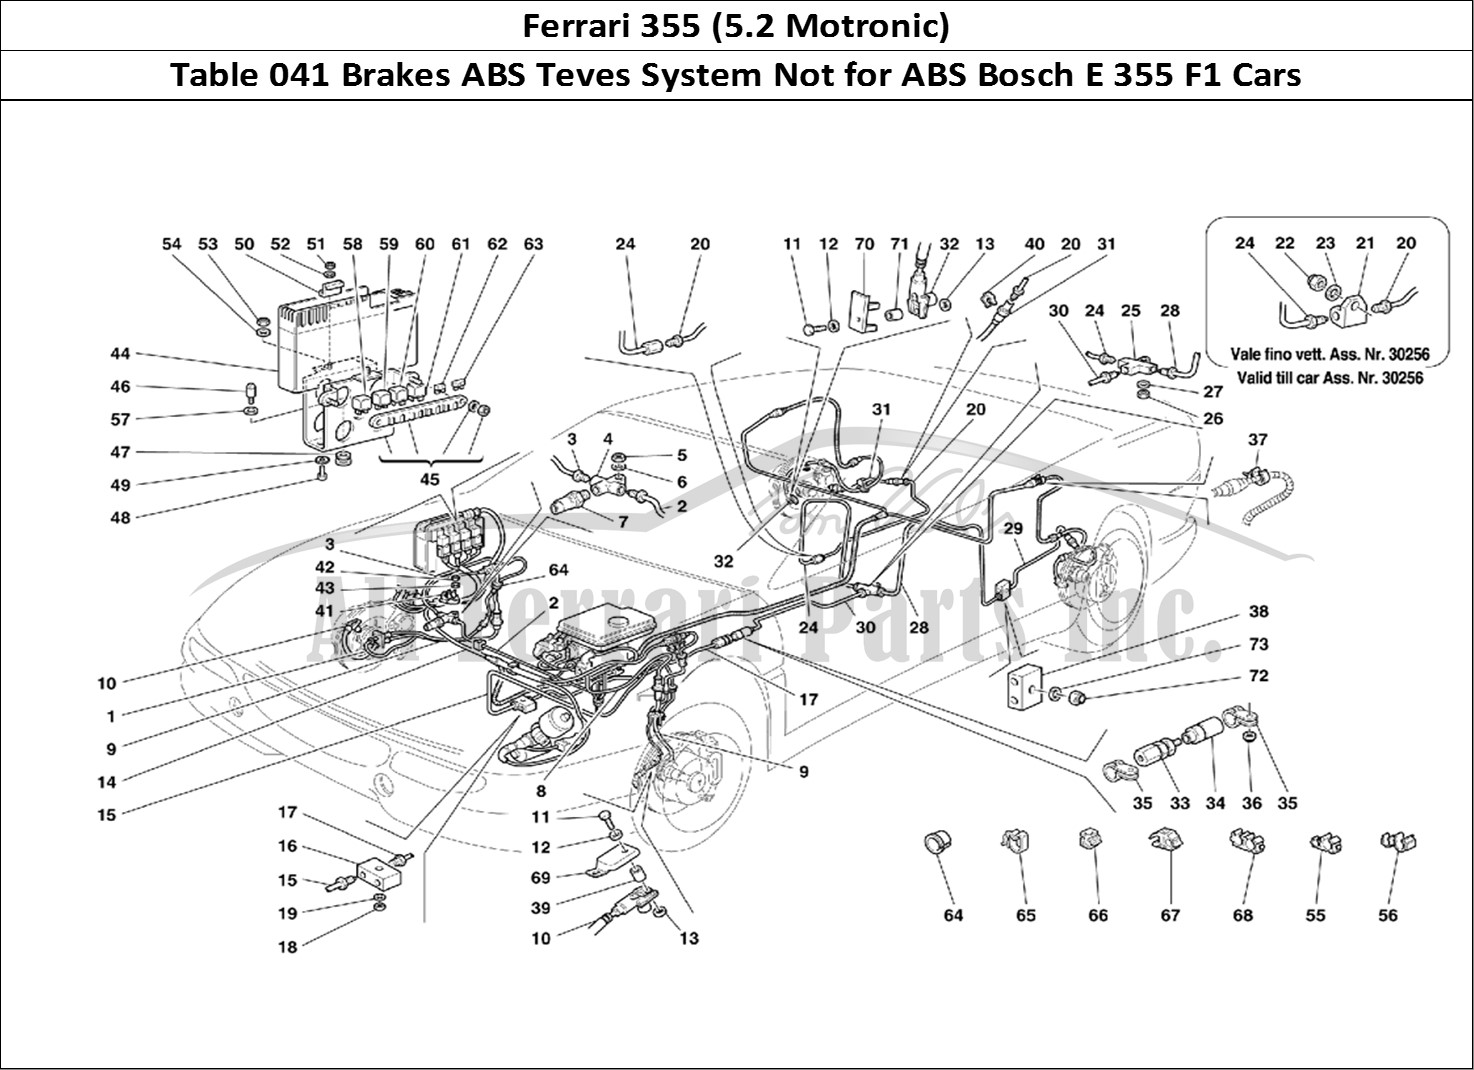 Ferrari Parts Ferrari 355 (5.2 Motronic) Page 041 ABS Teves Brake System -N